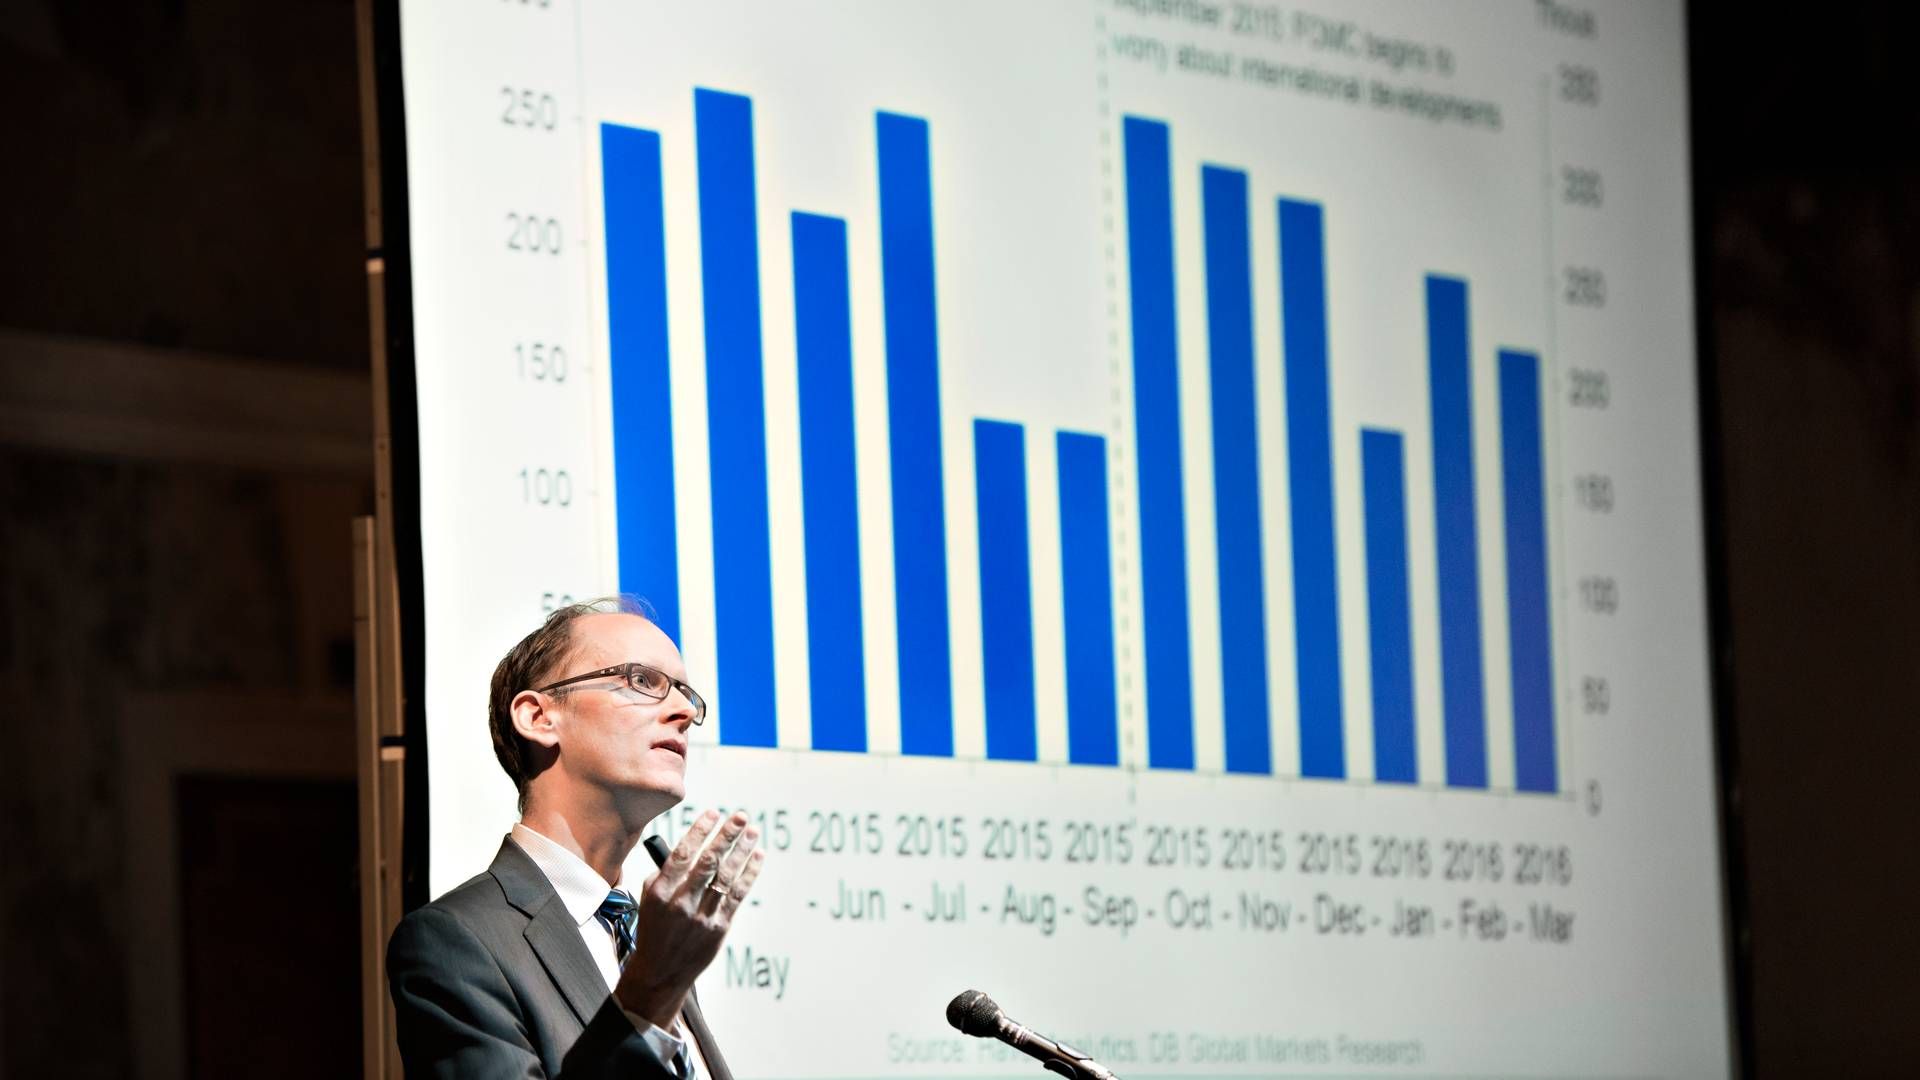 Torsten Sløk ses her på scenen ved Realkreditforeningens årsmøde i 2016. Dengang var han Chief International Economist hos Deutsche Bank. | Foto: Lars Krabbe